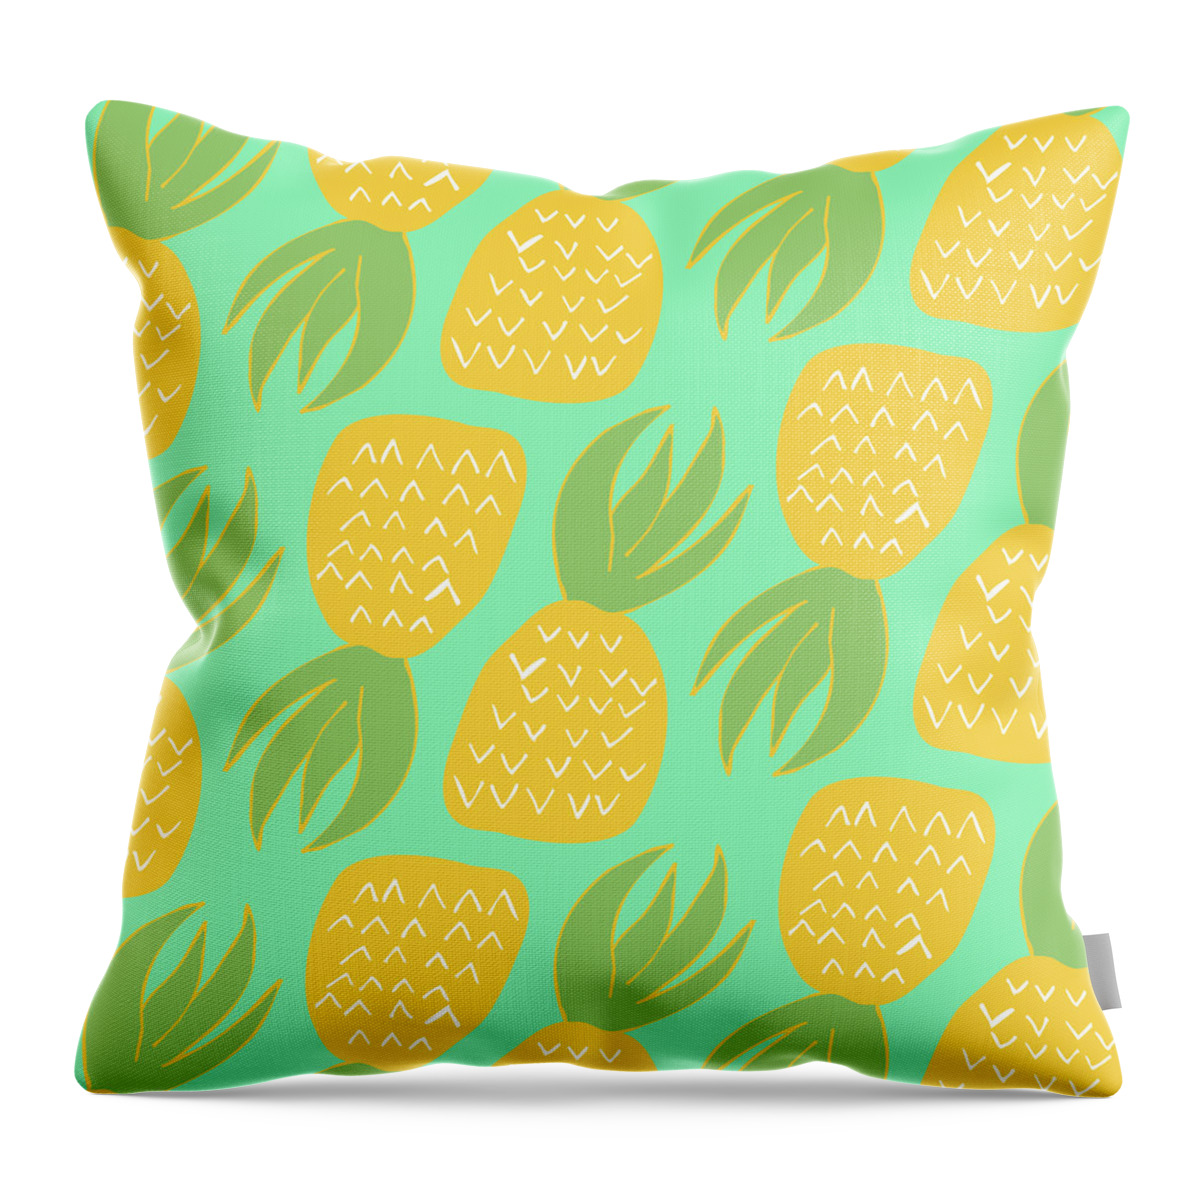 Summer Pineapples Throw Pillow featuring the digital art Summer Pineapples by Allyson Johnson